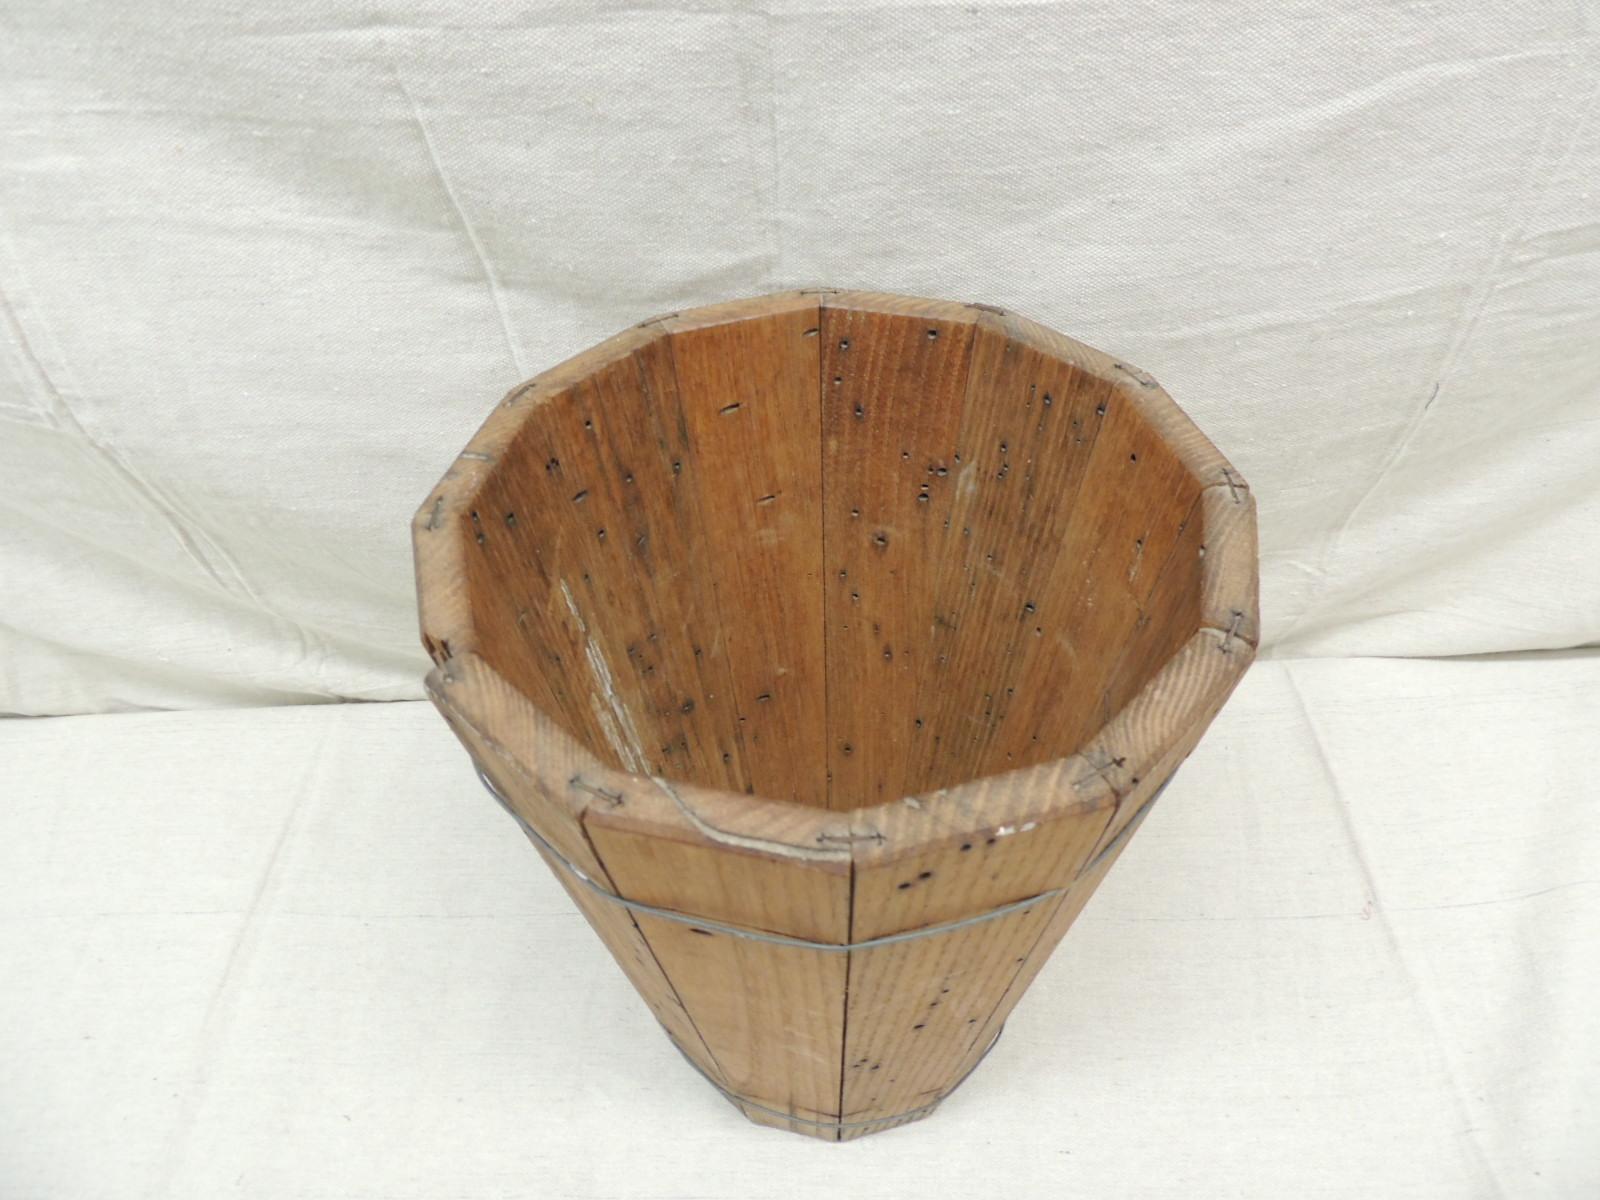 Vintage artisanal wood and wire barrel style wastebasket.
Size: 10